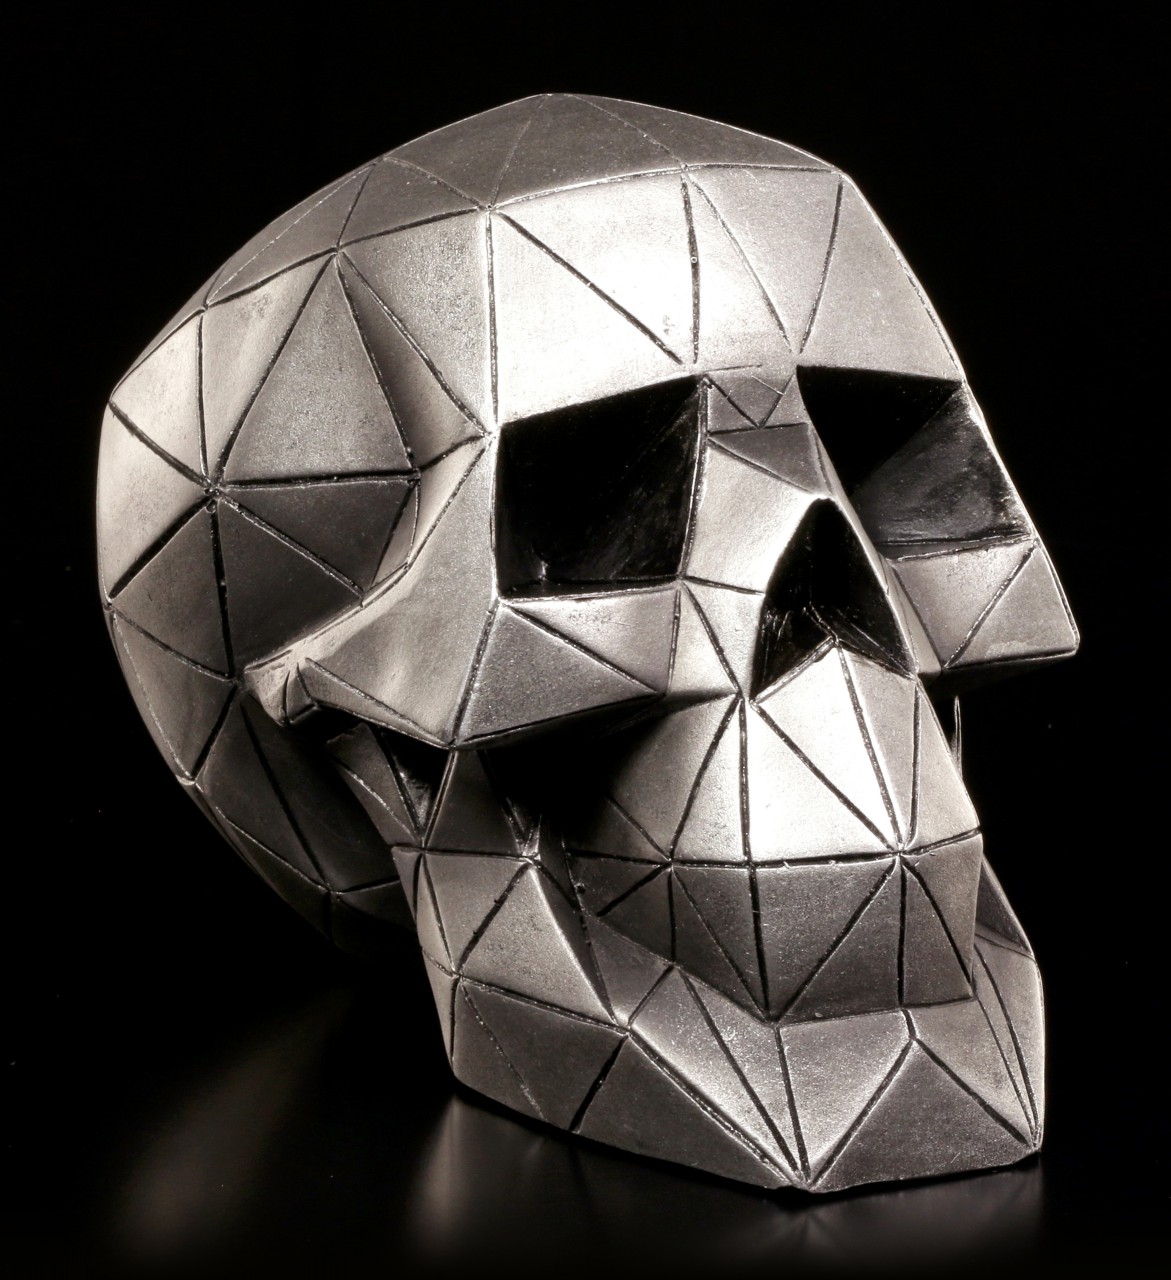 Geometric Skull